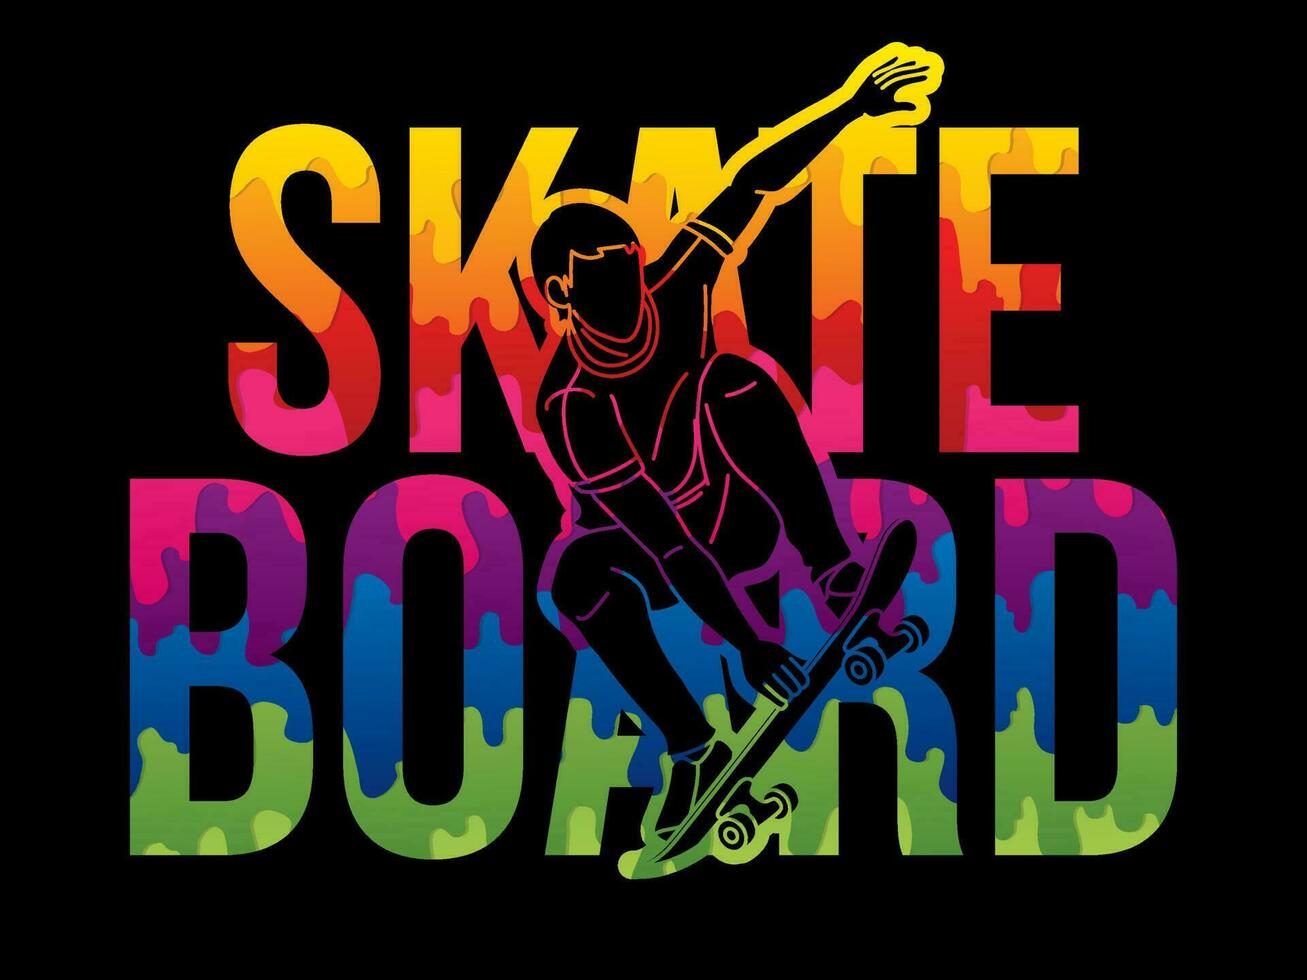 patineta y skater acción con texto vector